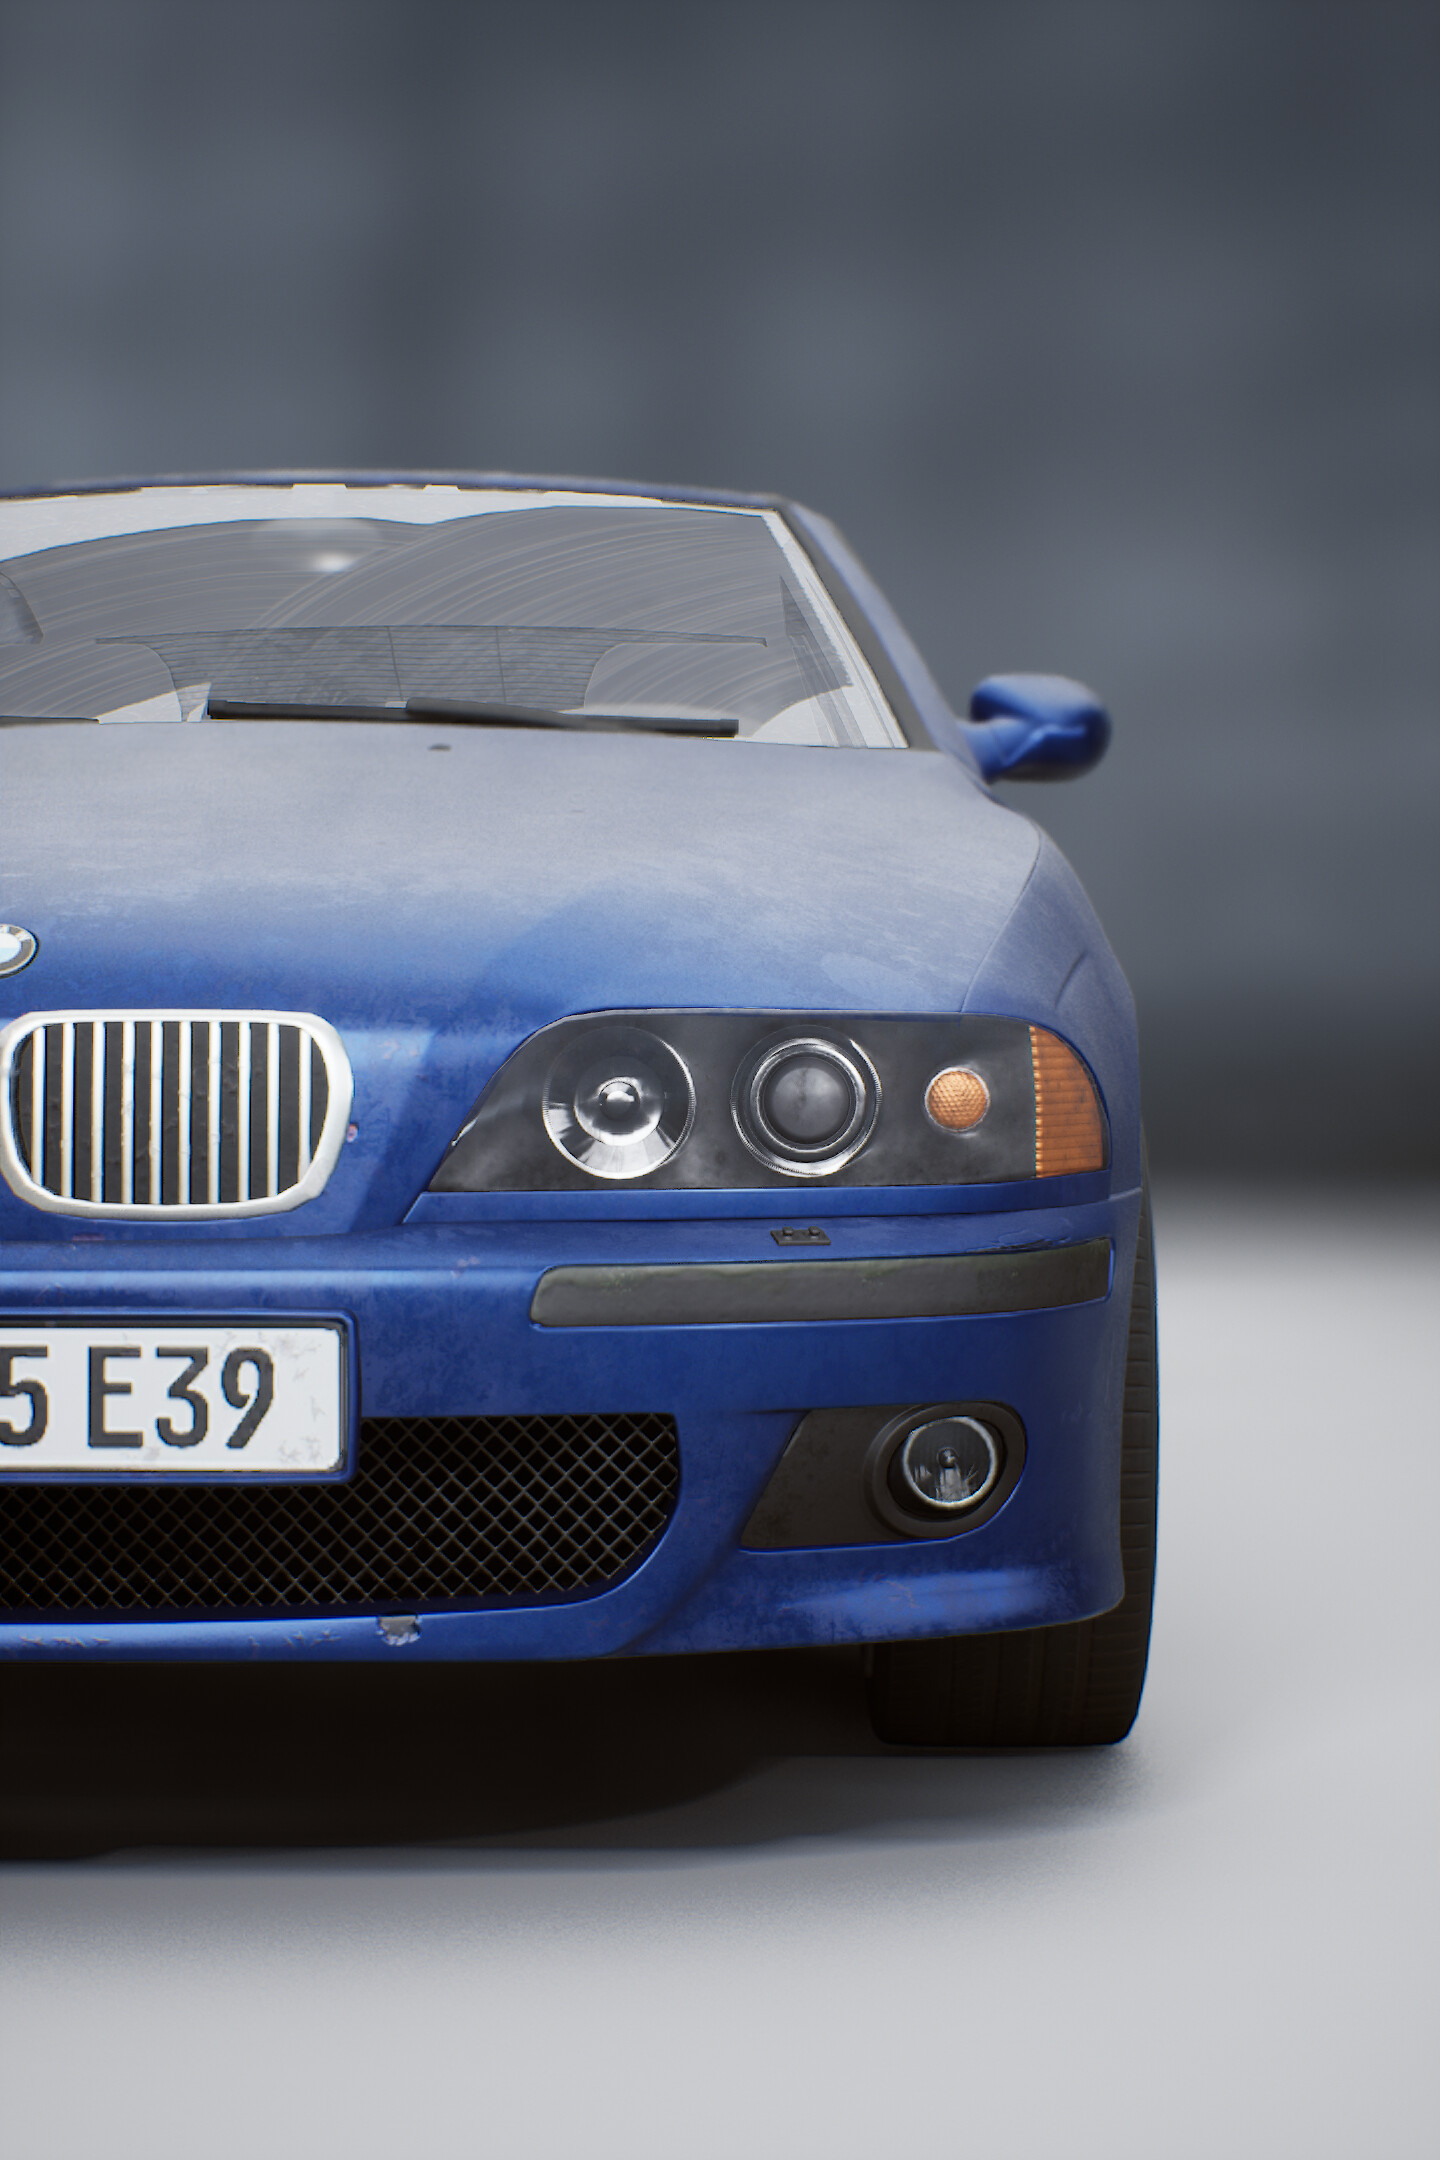 BMW E39 M5 - incredible